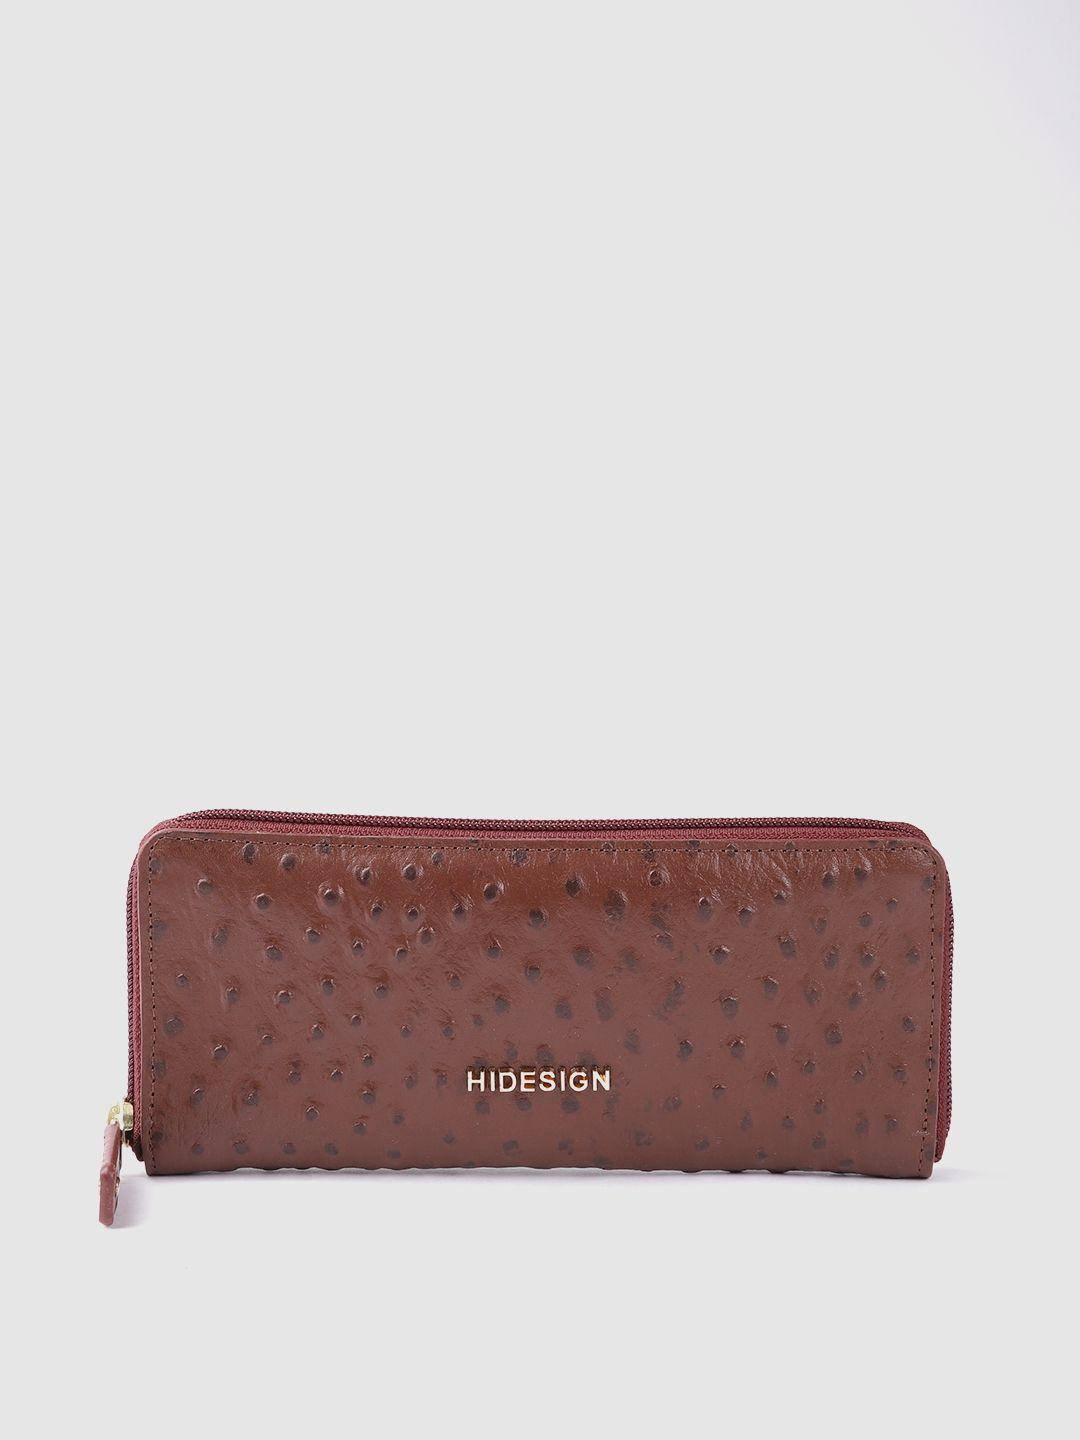 hidesign women abstract textured leather zip around wallet